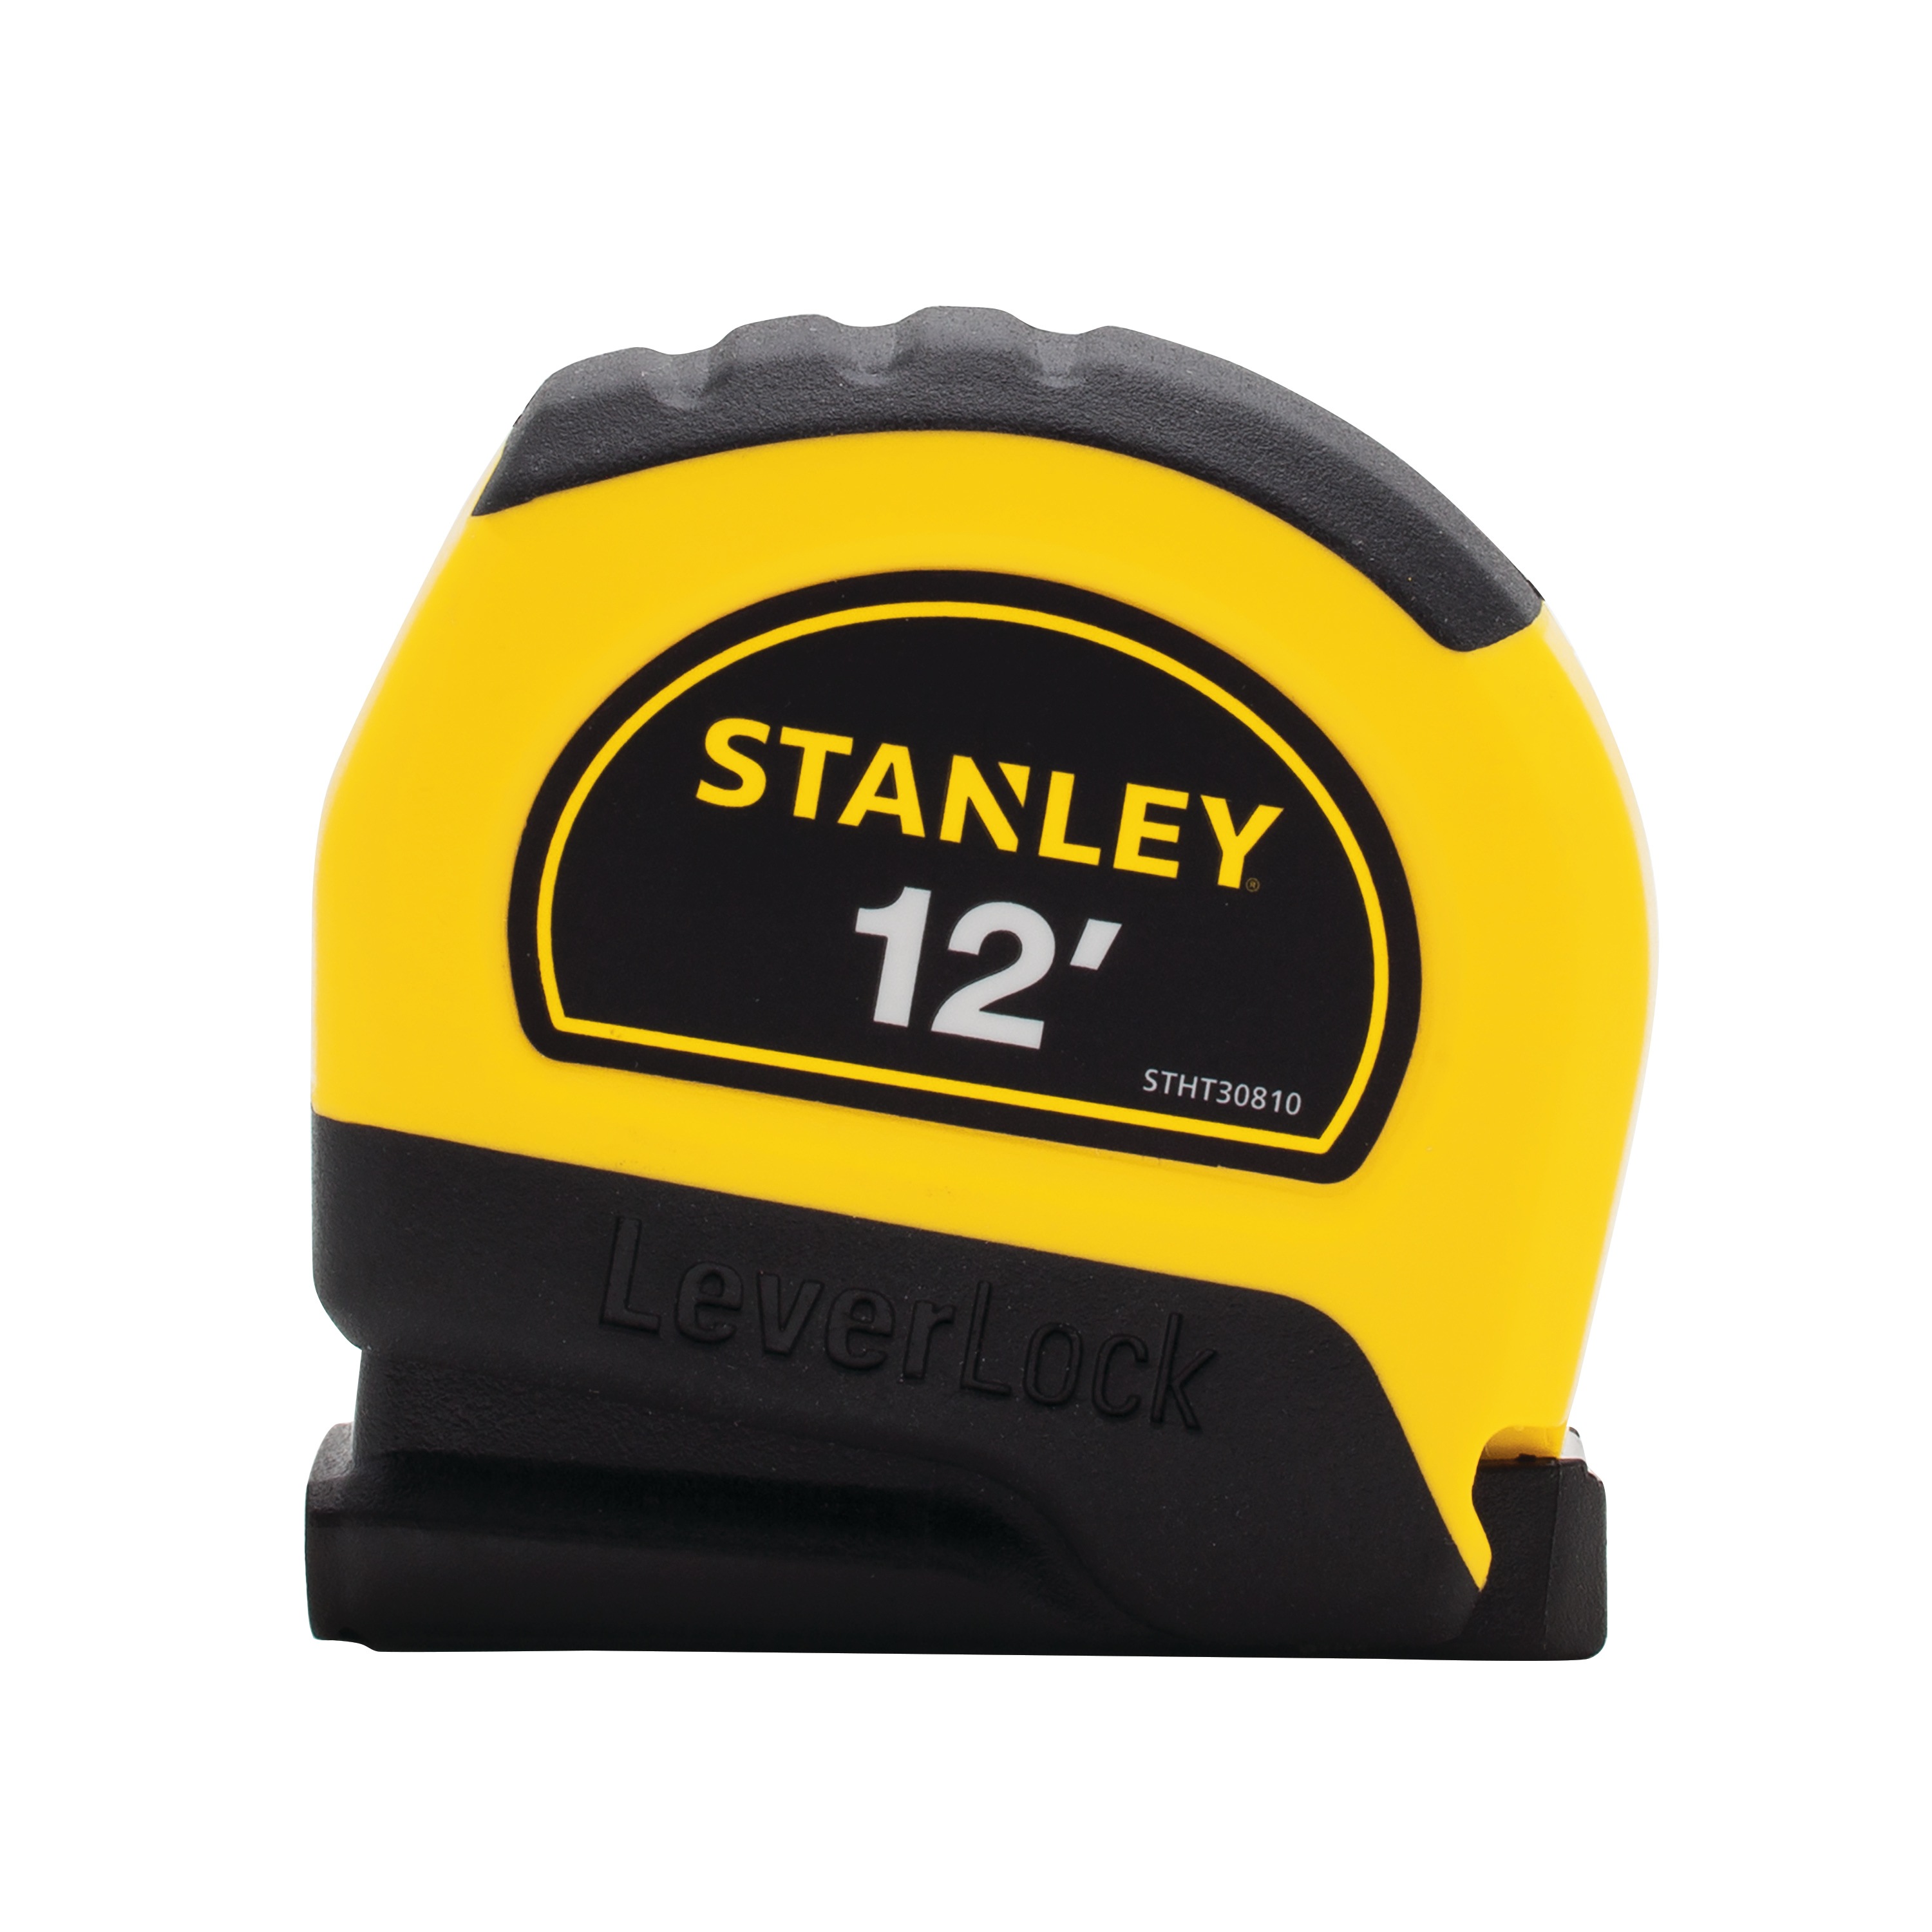 Stanley Tools - 12 ft LEVERLOCK Tape Measure - STHT30810